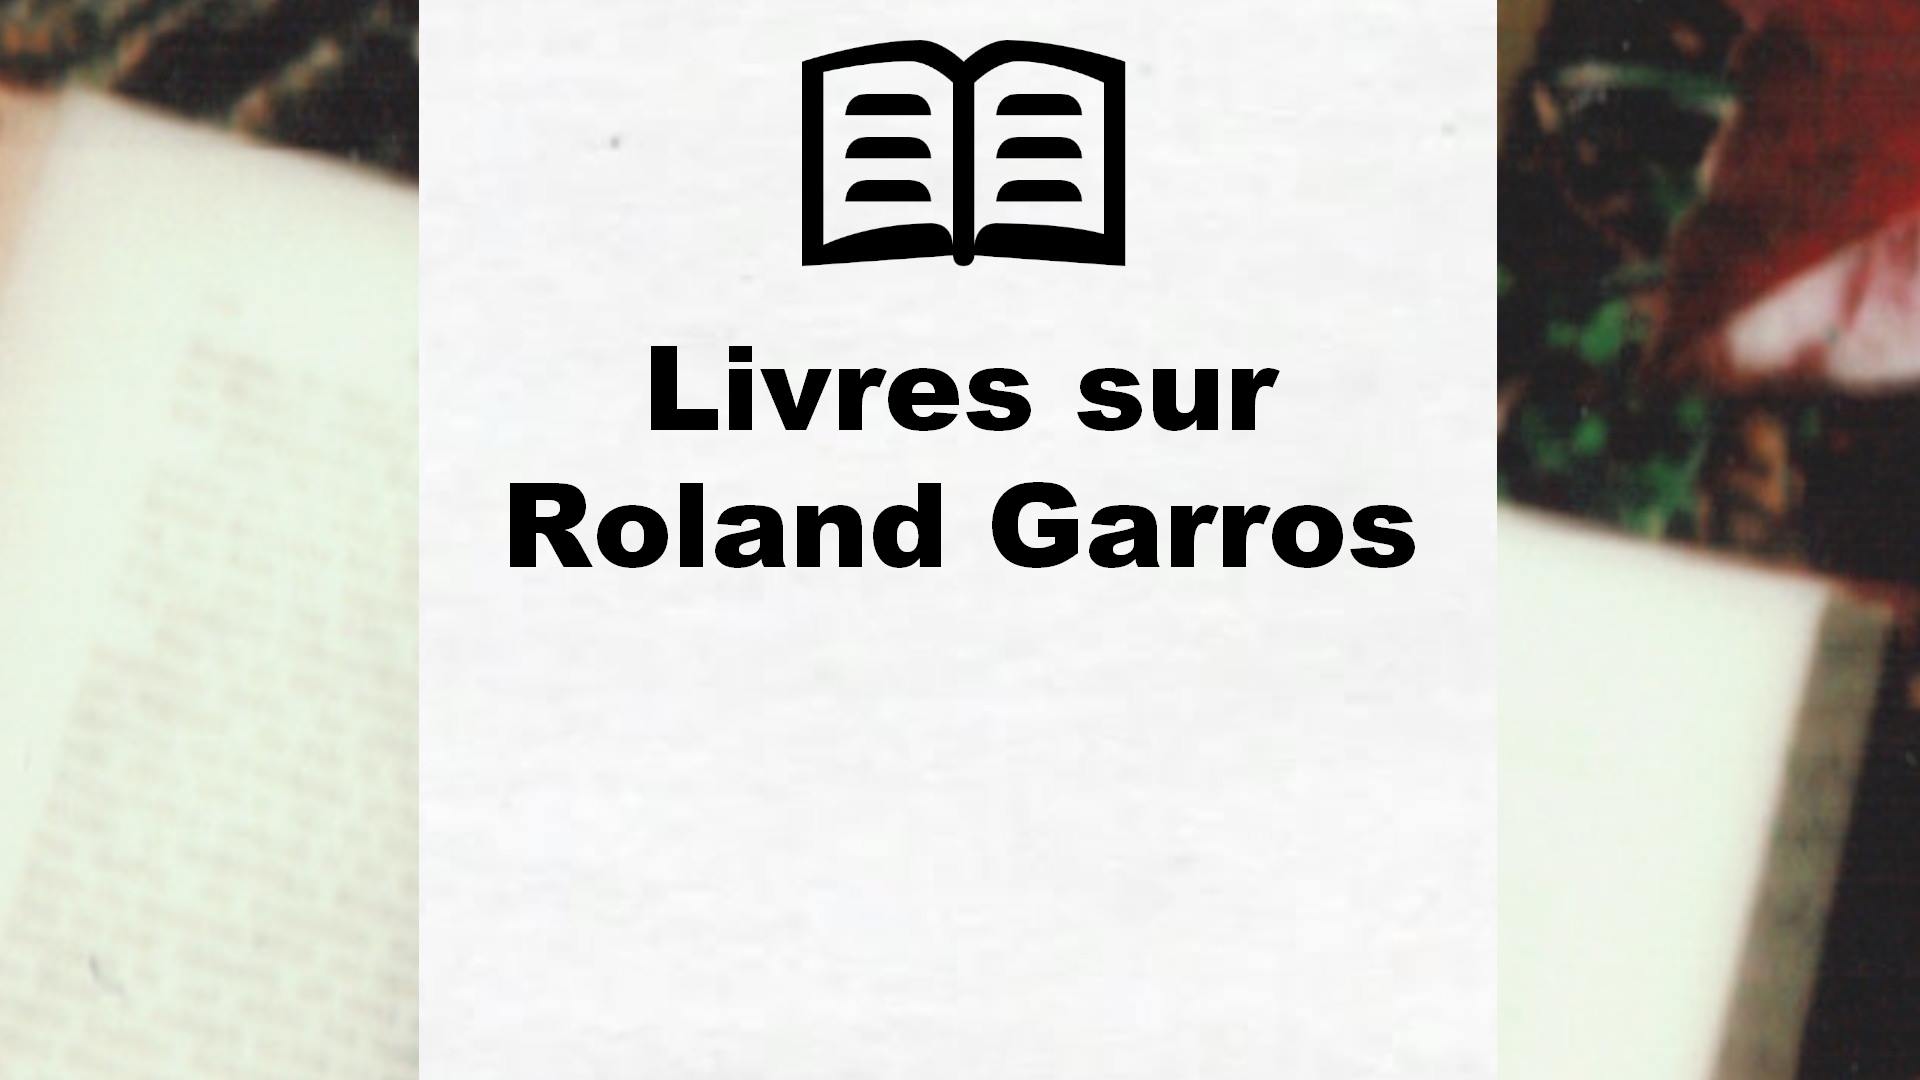 Livres sur Roland Garros